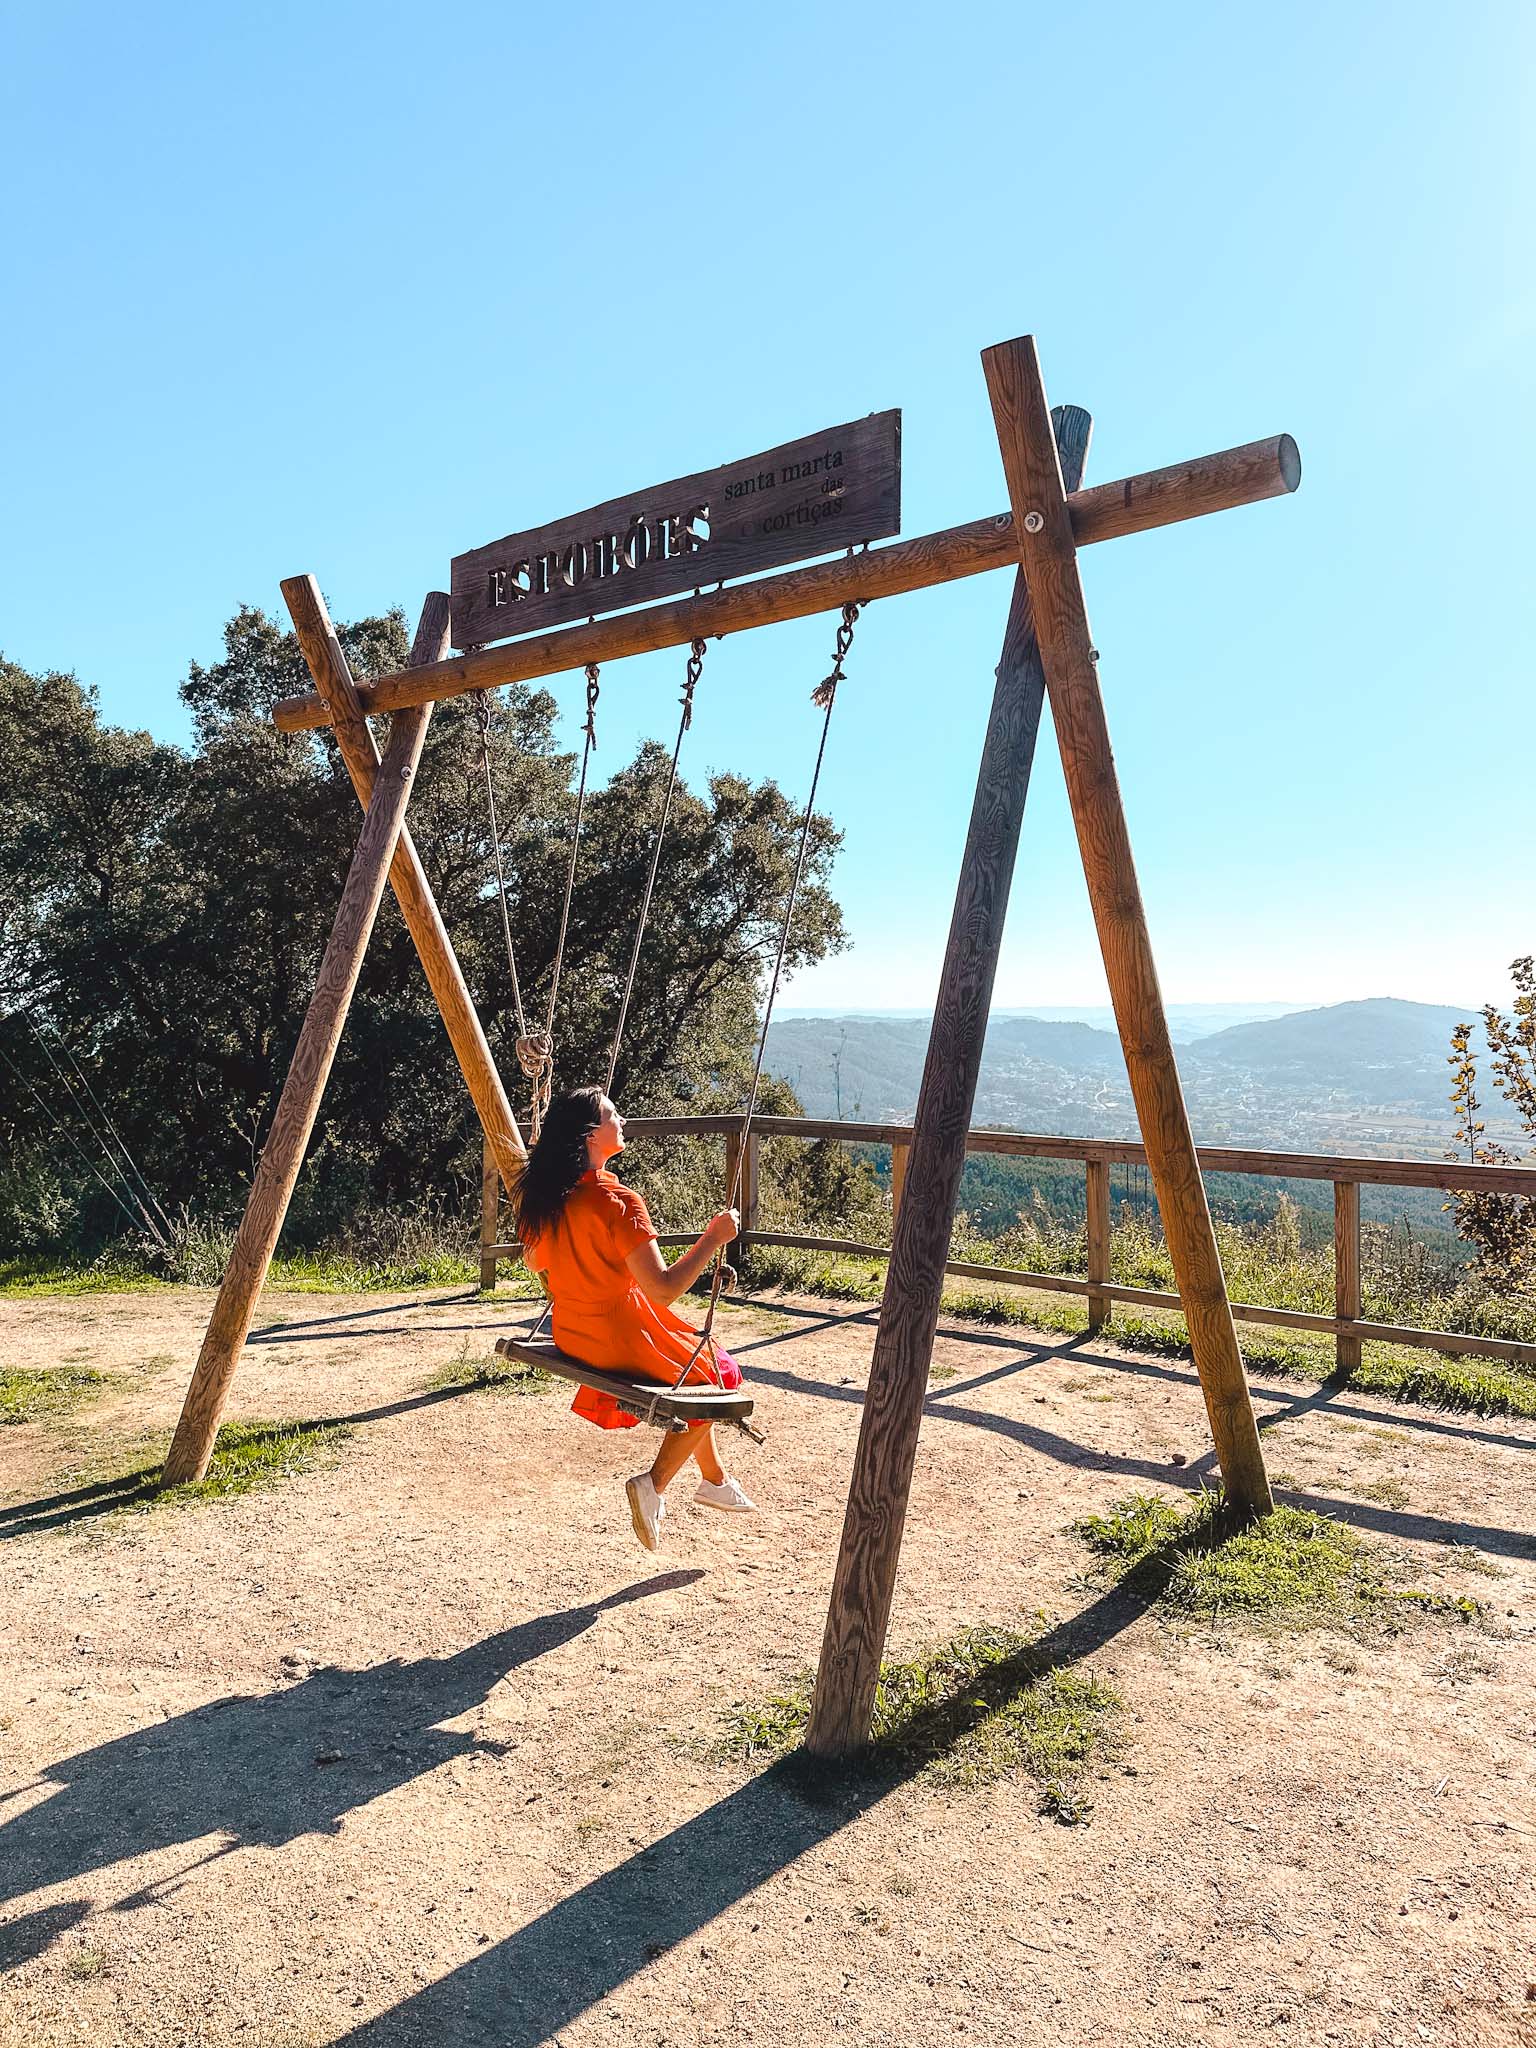 Swings in Portugal - Baloiço Panorâmico de Esporões